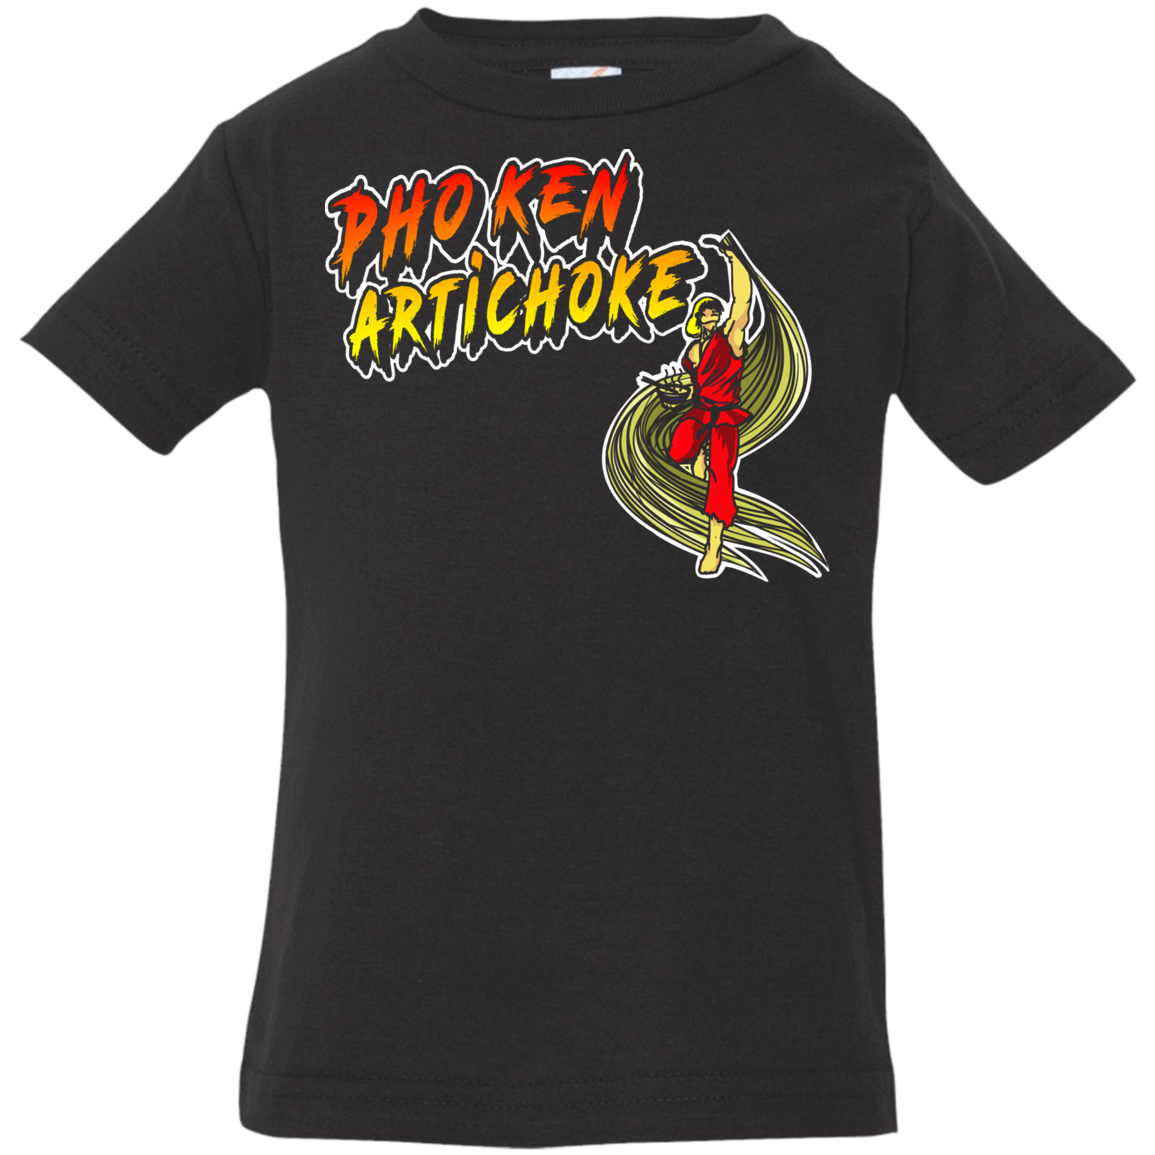 ArtichokeUSA Custom Design. Pho Ken Artichoke. Street Fighter Parody. Gaming. Infant Jersey T-Shirt